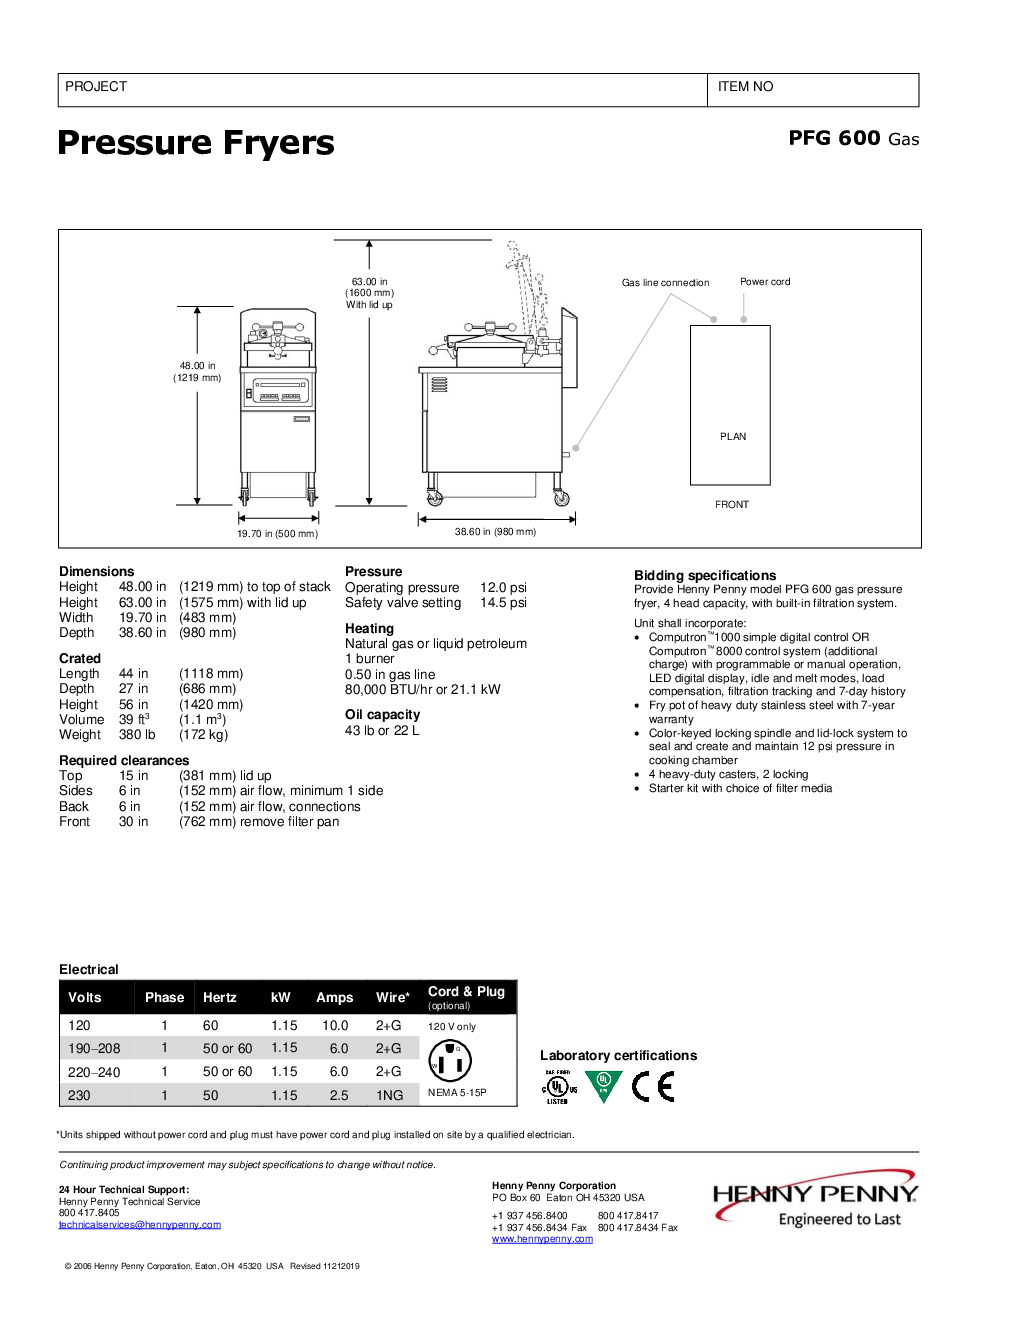 Henny Penny PFG600.19 Gas Pressure Fryer w/ 43-lb Oil Capacity, Rectangular Frypot, 12 PSI